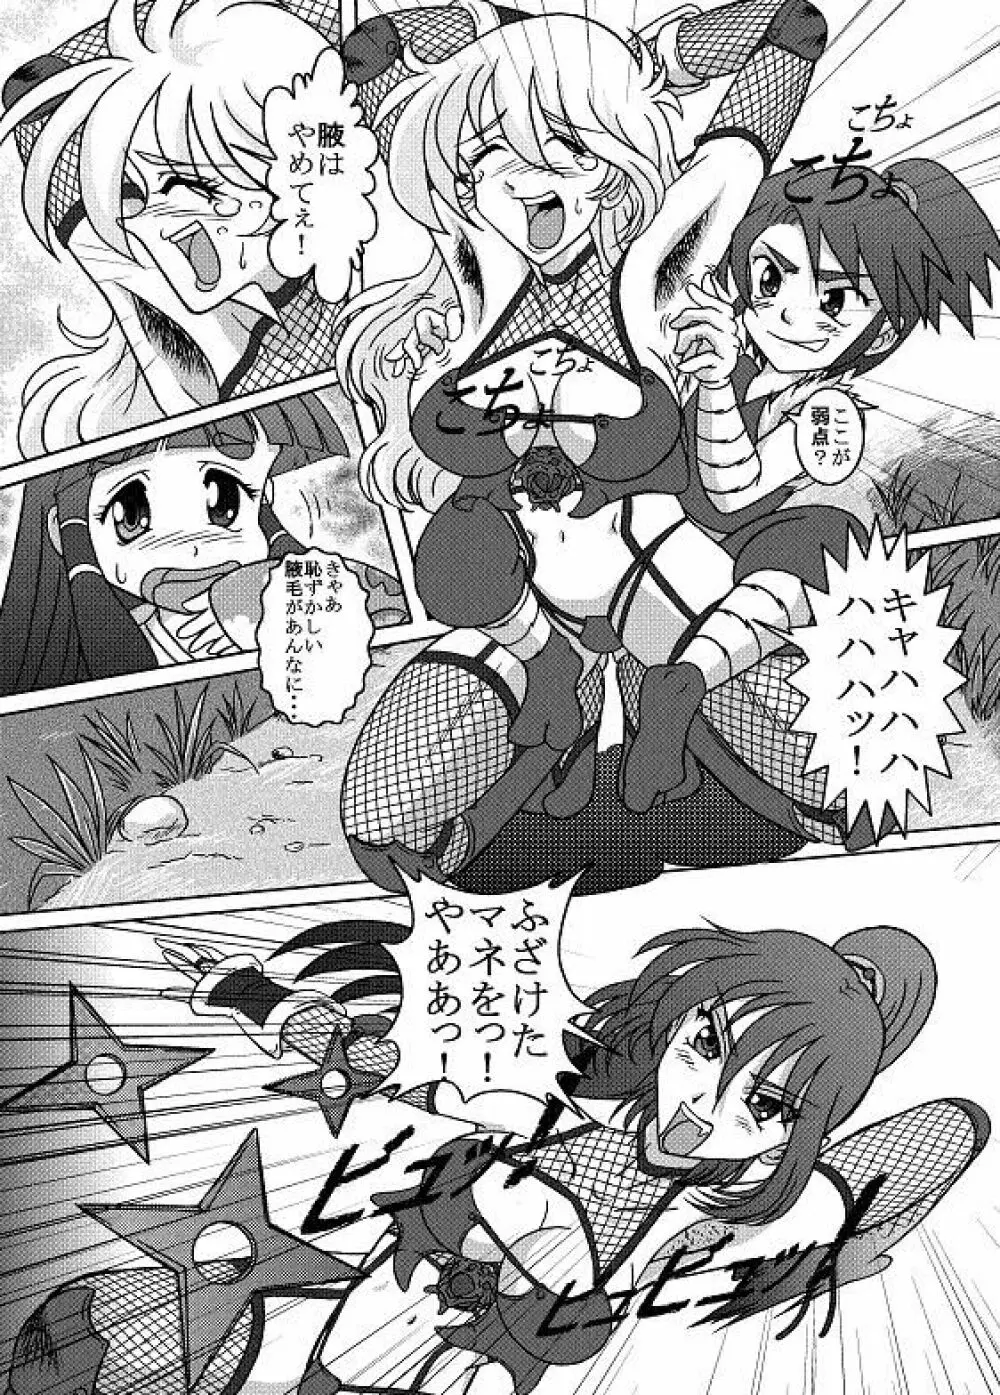 Same-themed manga about kid fighting female ninjas from japanese imageboard. 38ページ